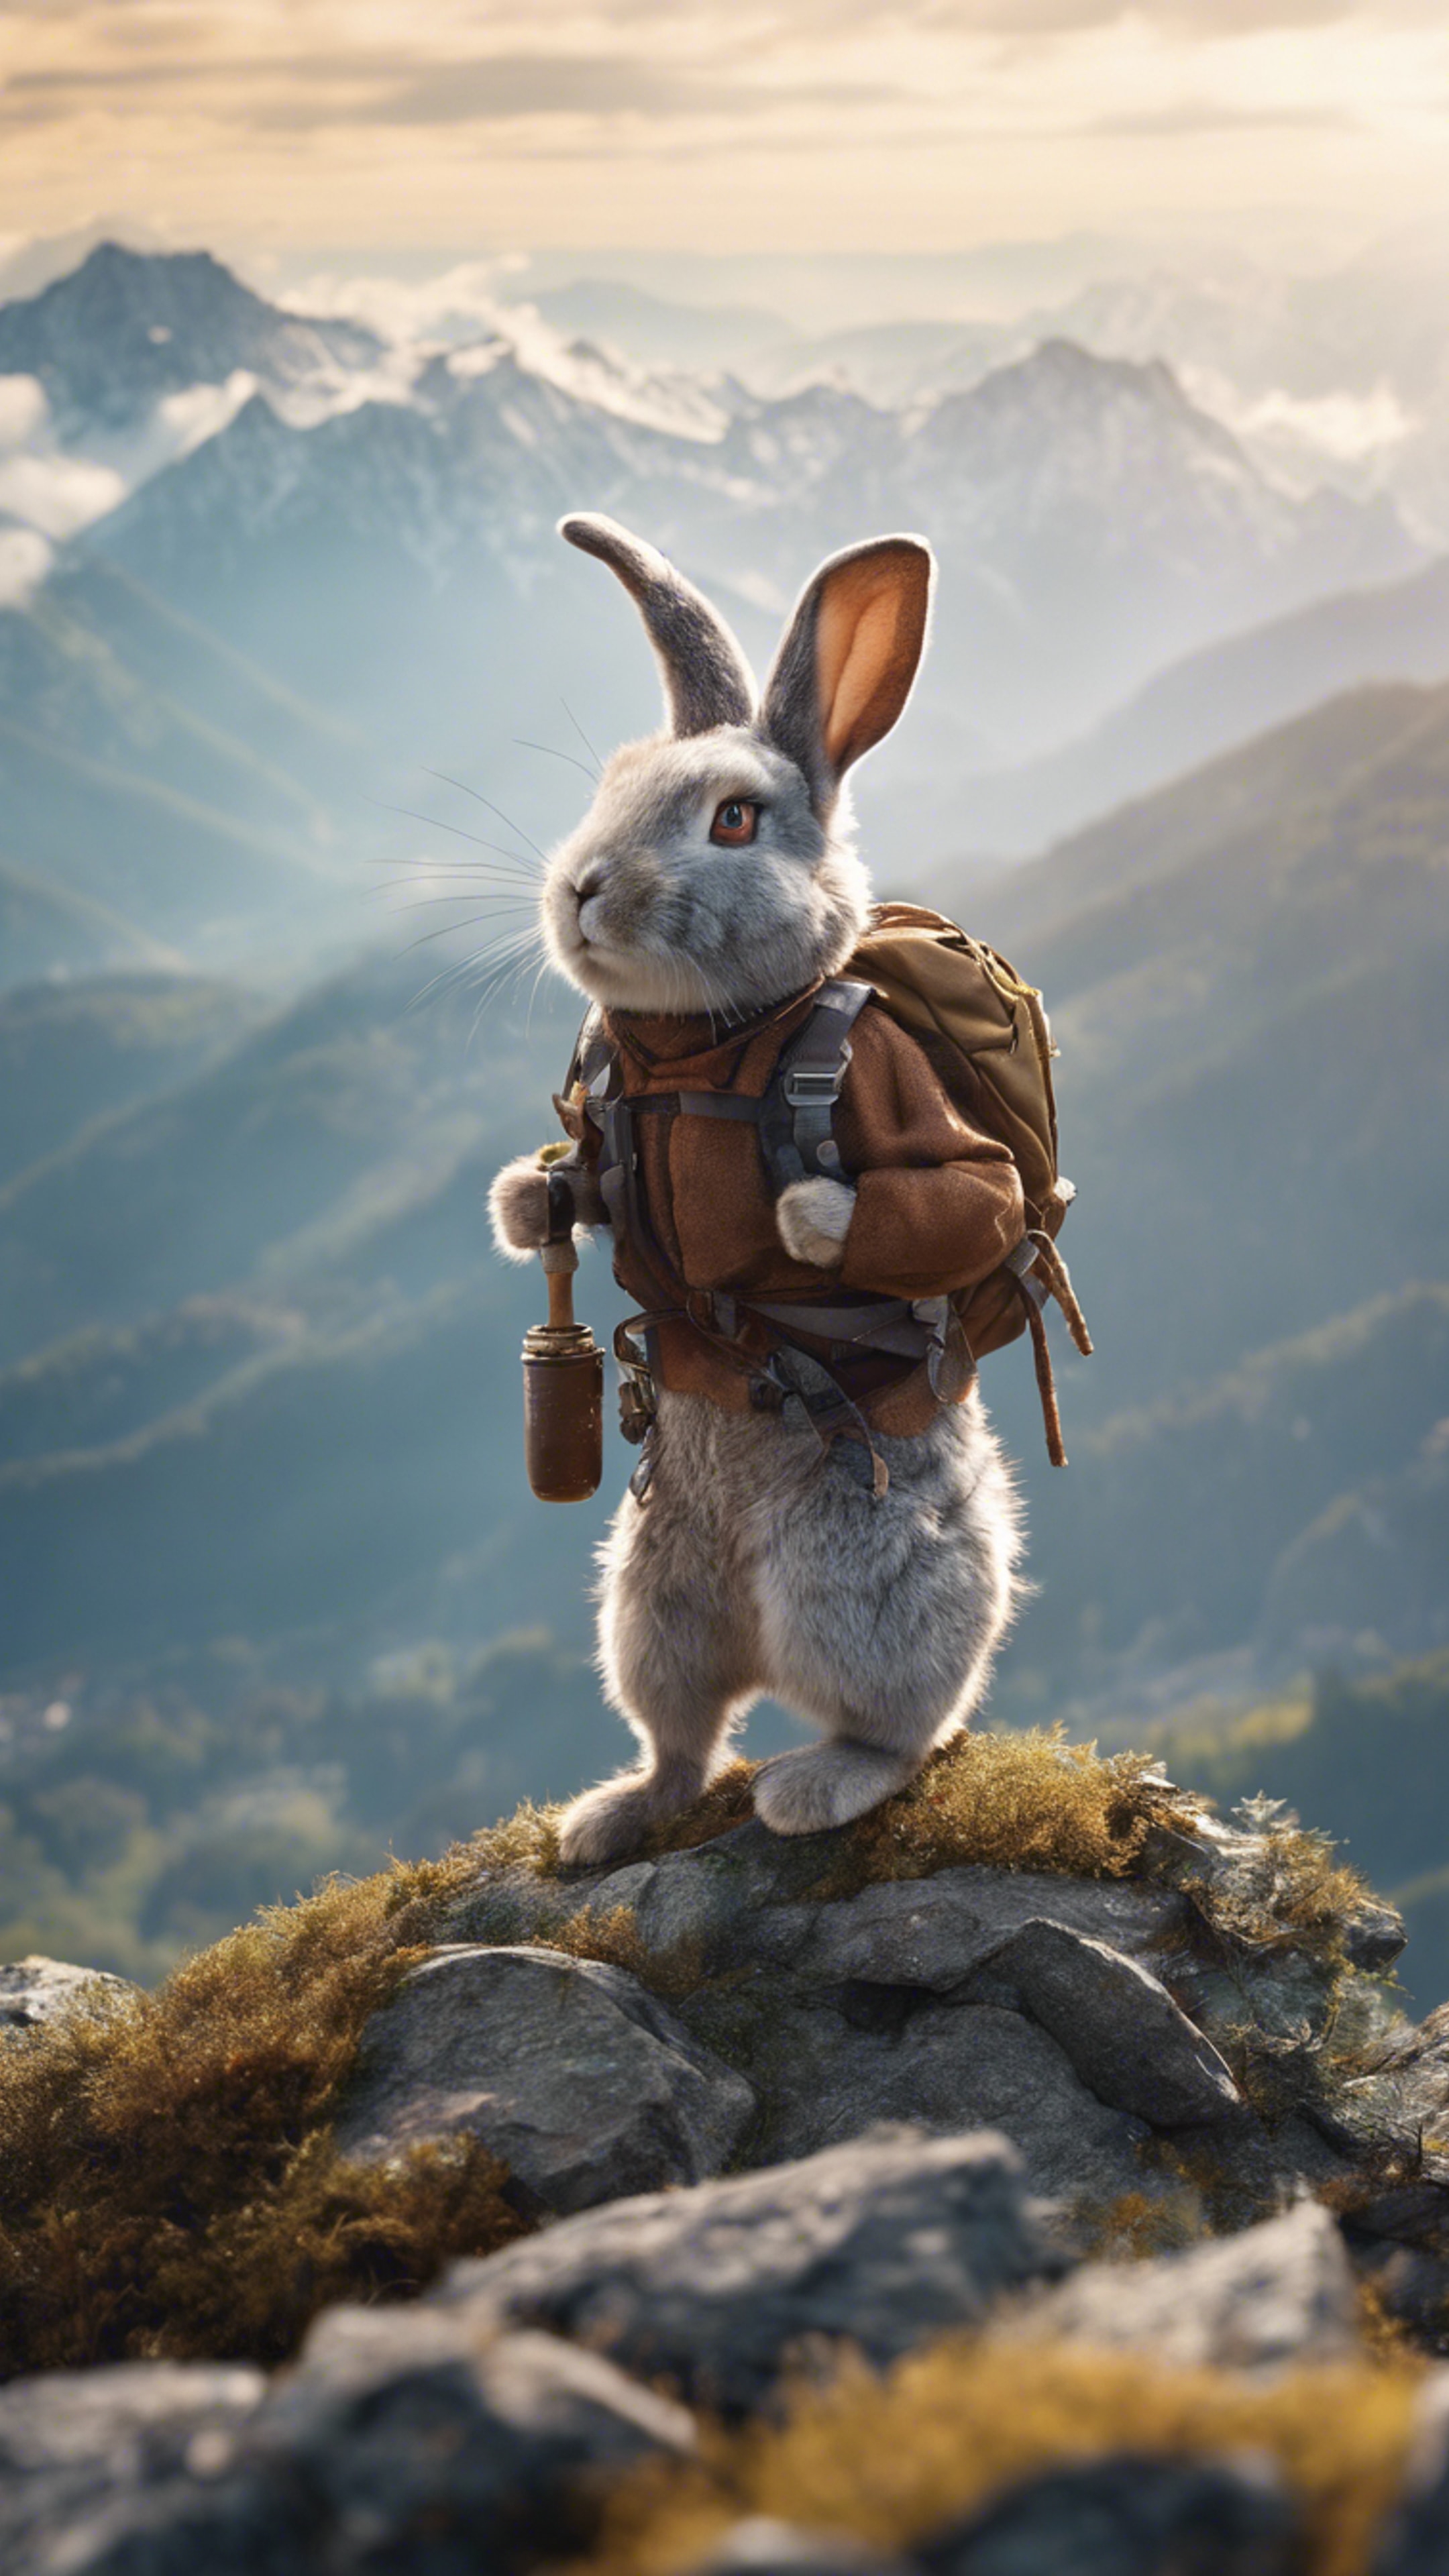 A Rabbit mountaineer conquering a treacherous peak. Tapet[faadaab6eec04e17a877]